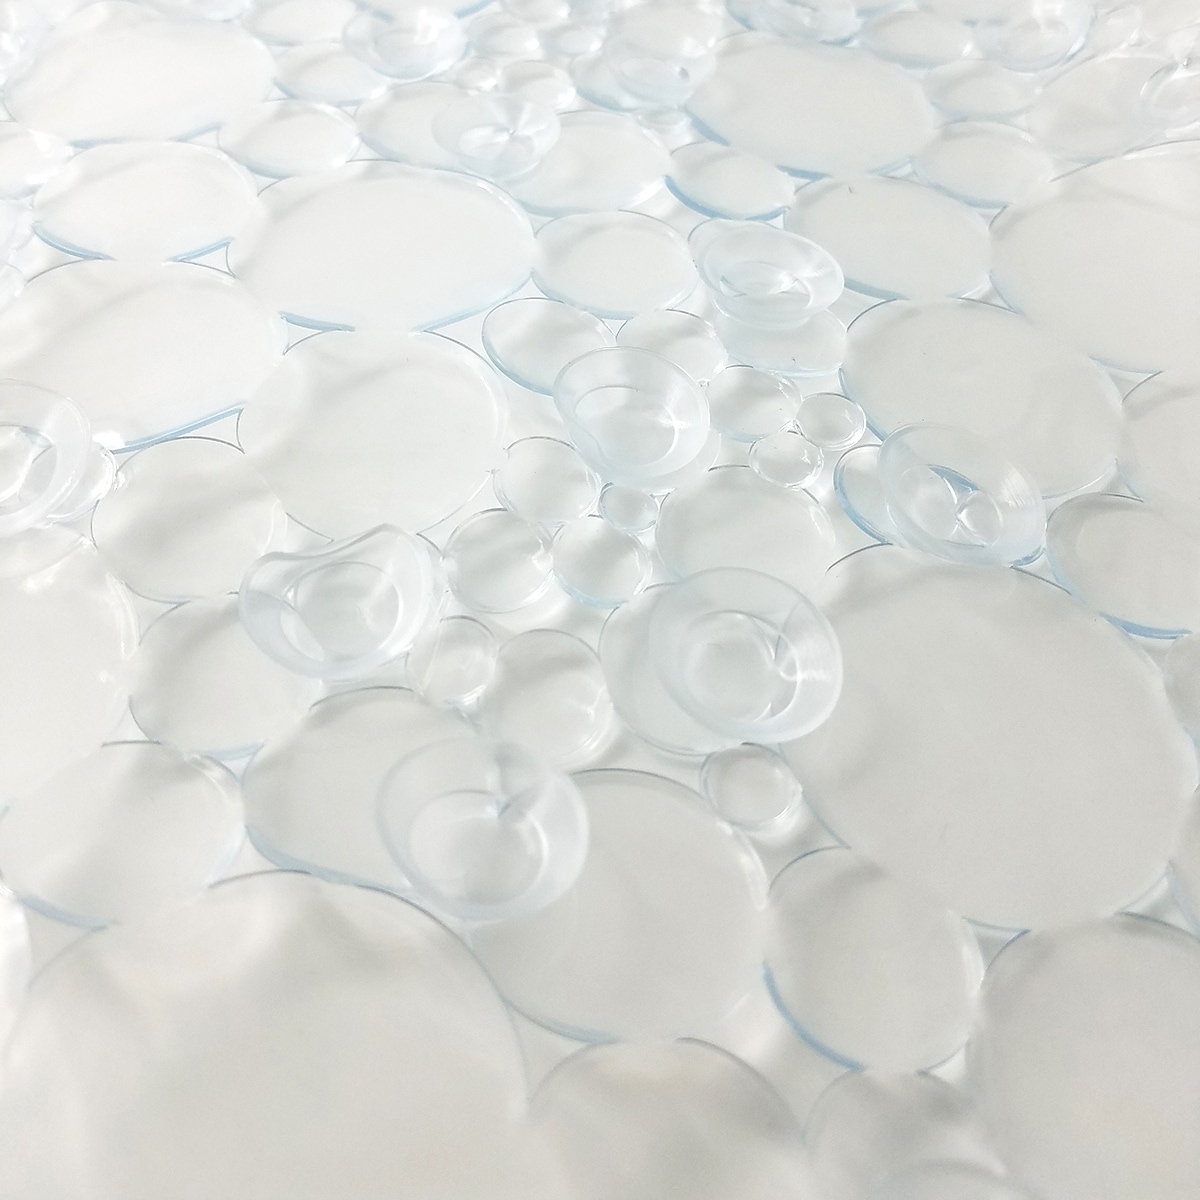 Evideco Bubbles Non-Slip Oval Bathtub Mat 28 L x 15 W - Clear Grey